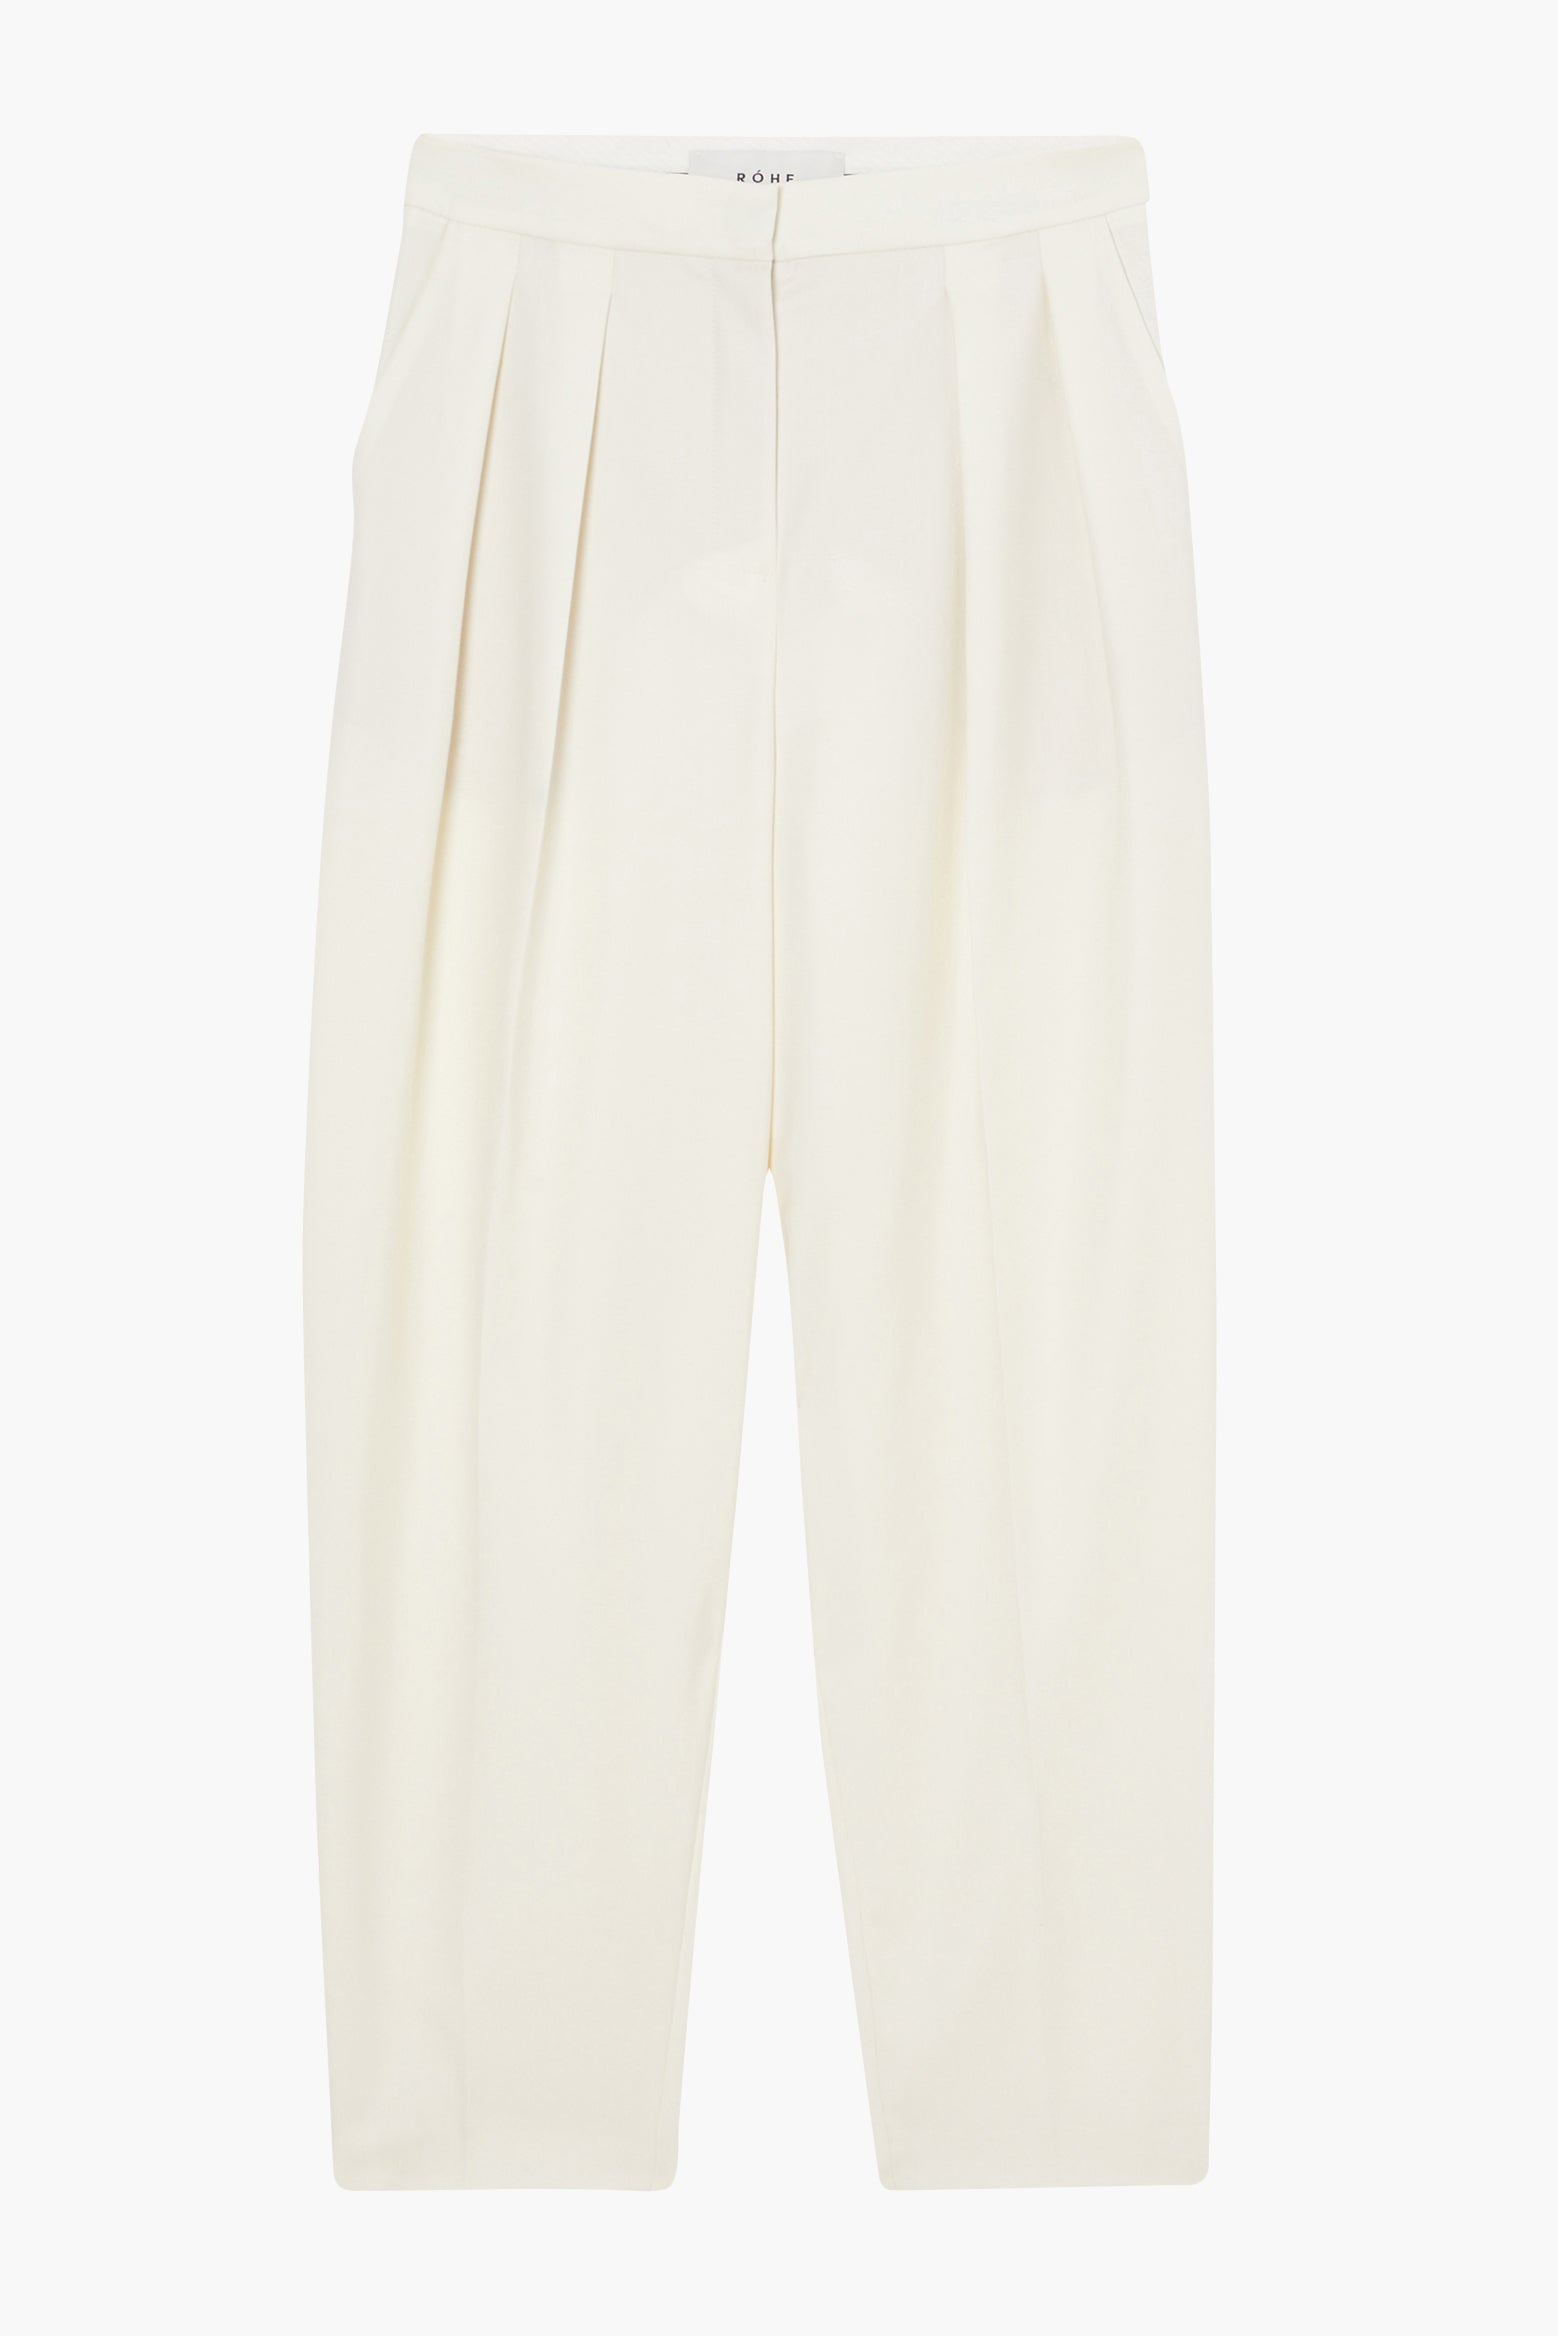 Rohe Double Pleat Tailored Trousers in Cream TNT The New Trend Australia